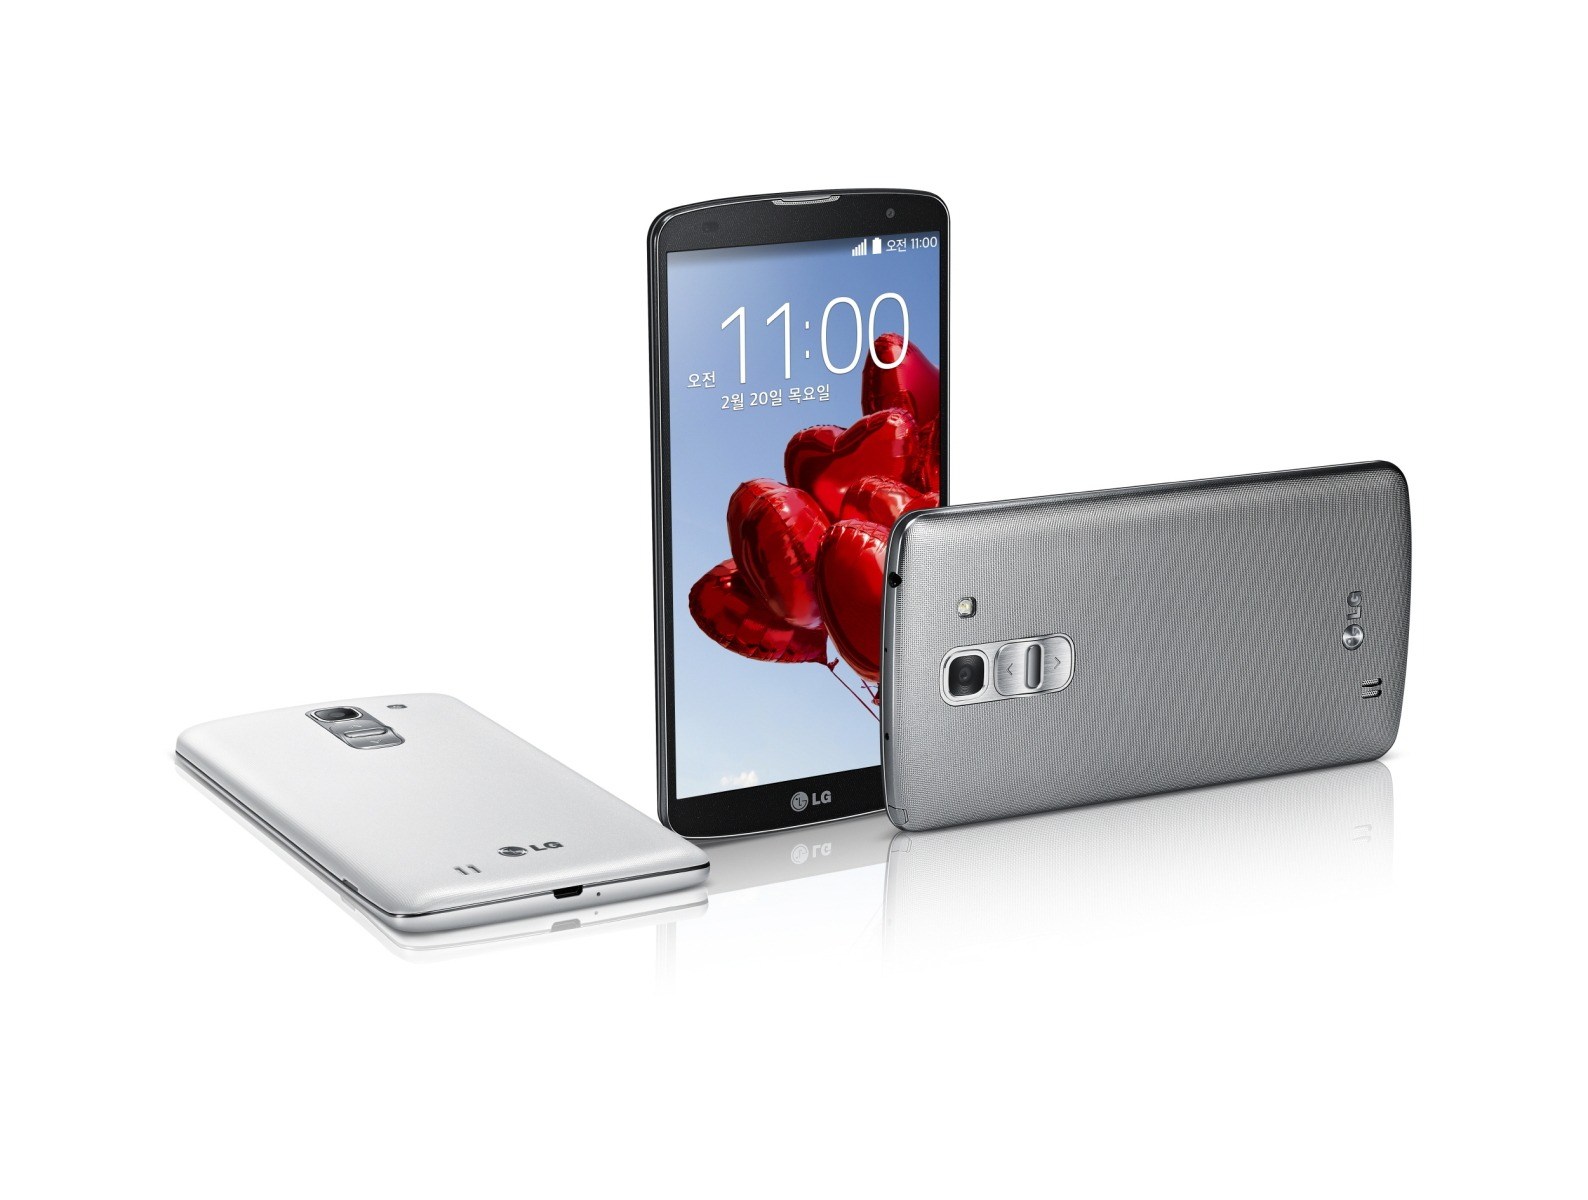 kurz gemeldet: LG G Pro 2: Smartphone-Flaggschiff mit Ultra-HD-Videos